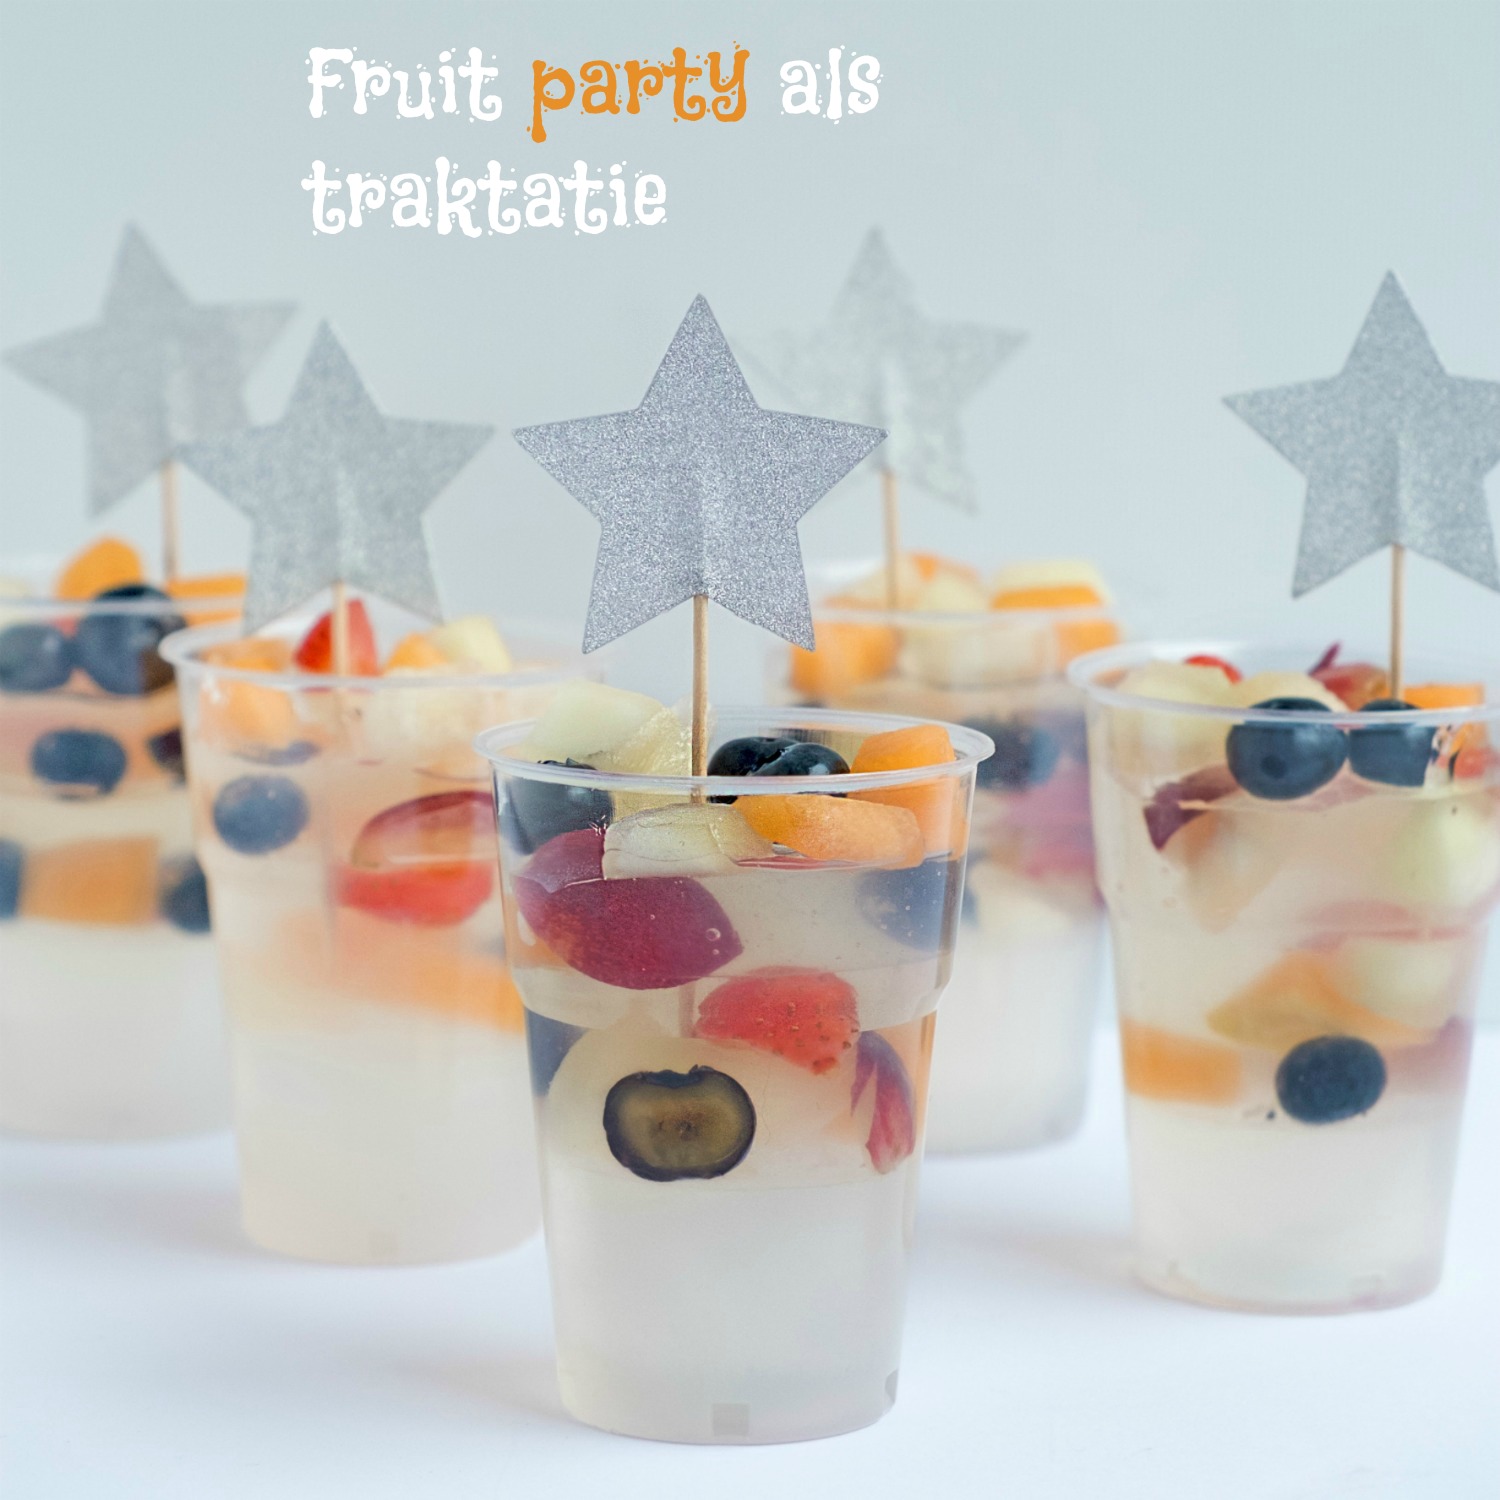 Fruit party als traktatie - Kinderfeest